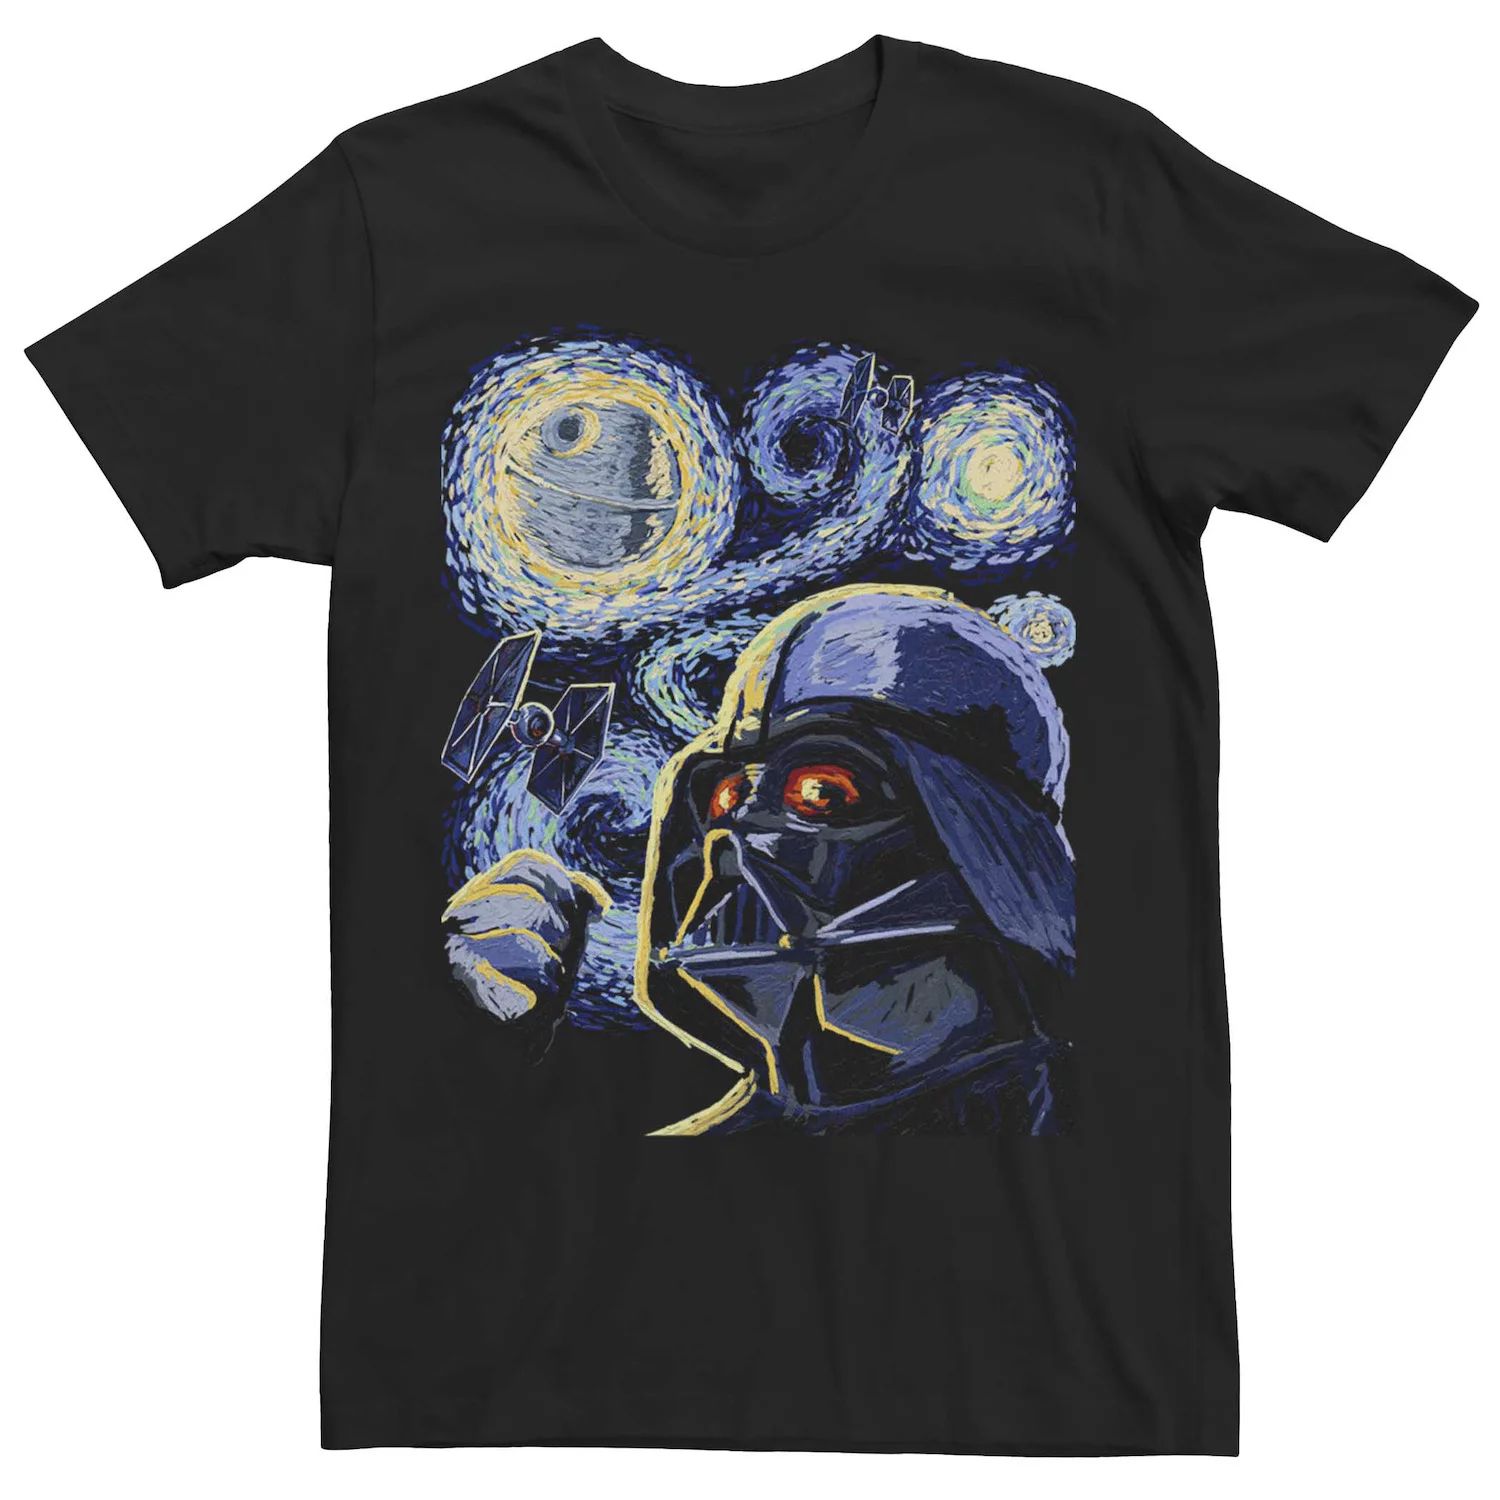 Мужская футболка с рисунком Дарта Вейдера «Звездные войны» Licensed Character